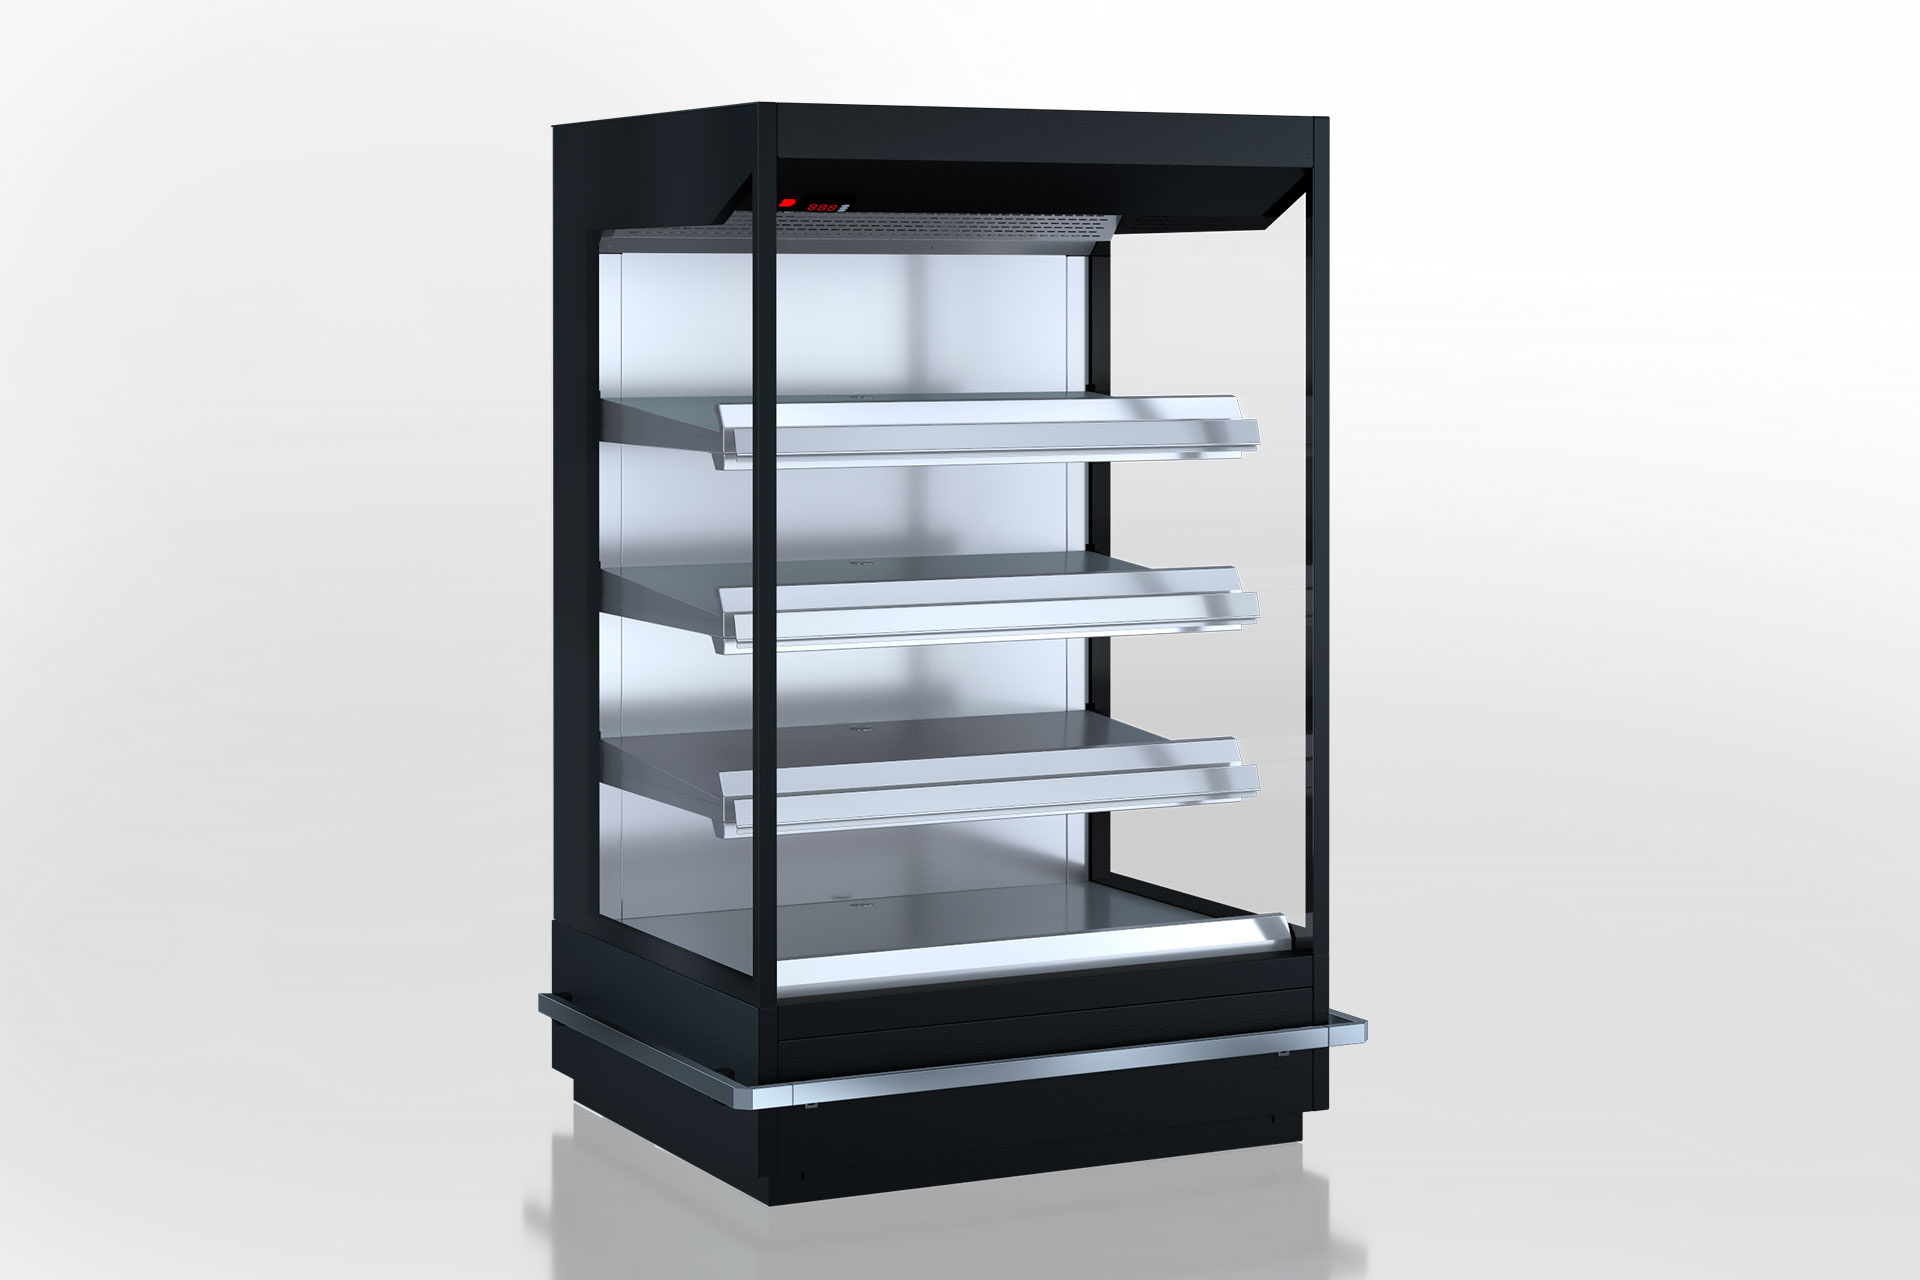 Thermal multideck cabinets Indiana NV 080 heat O 160